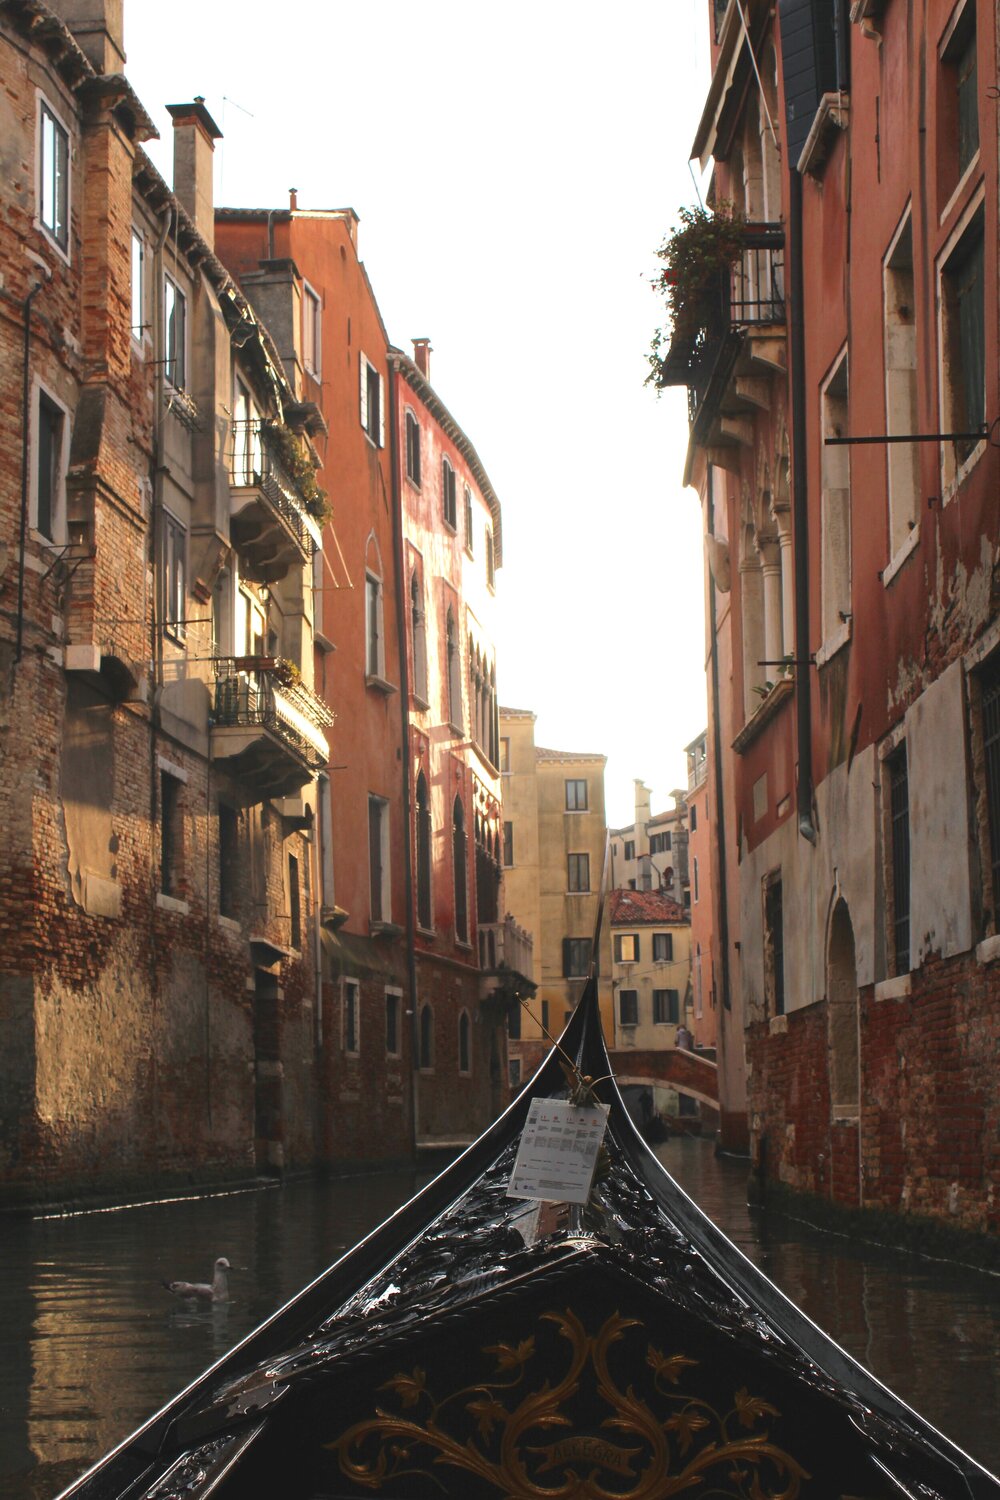 Gondola ride through a Venetian canal